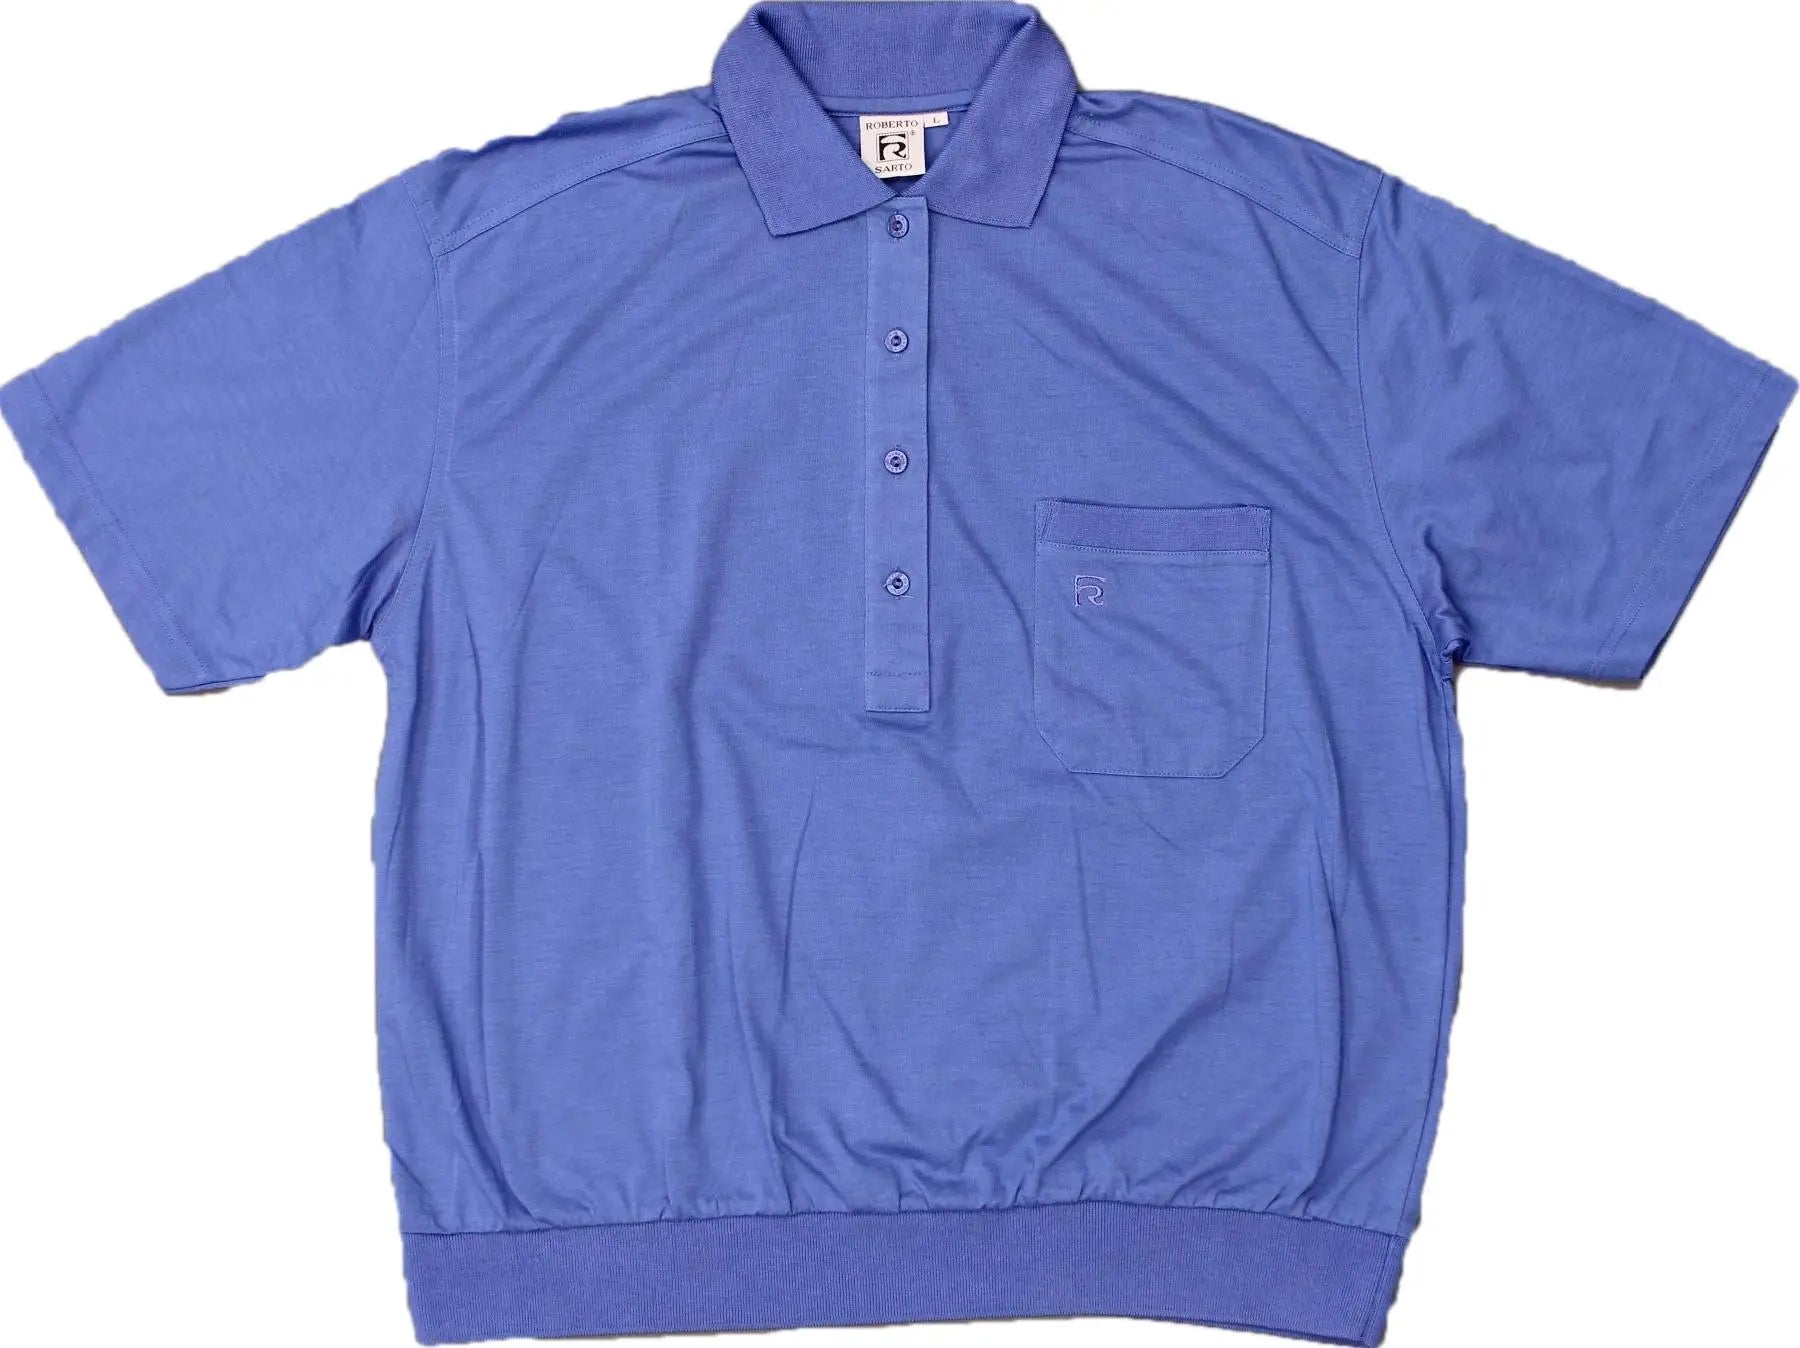 Roberto Sarto - Blue Polo Shirt by Roberto Sarto- ThriftTale.com - Vintage and second handclothing